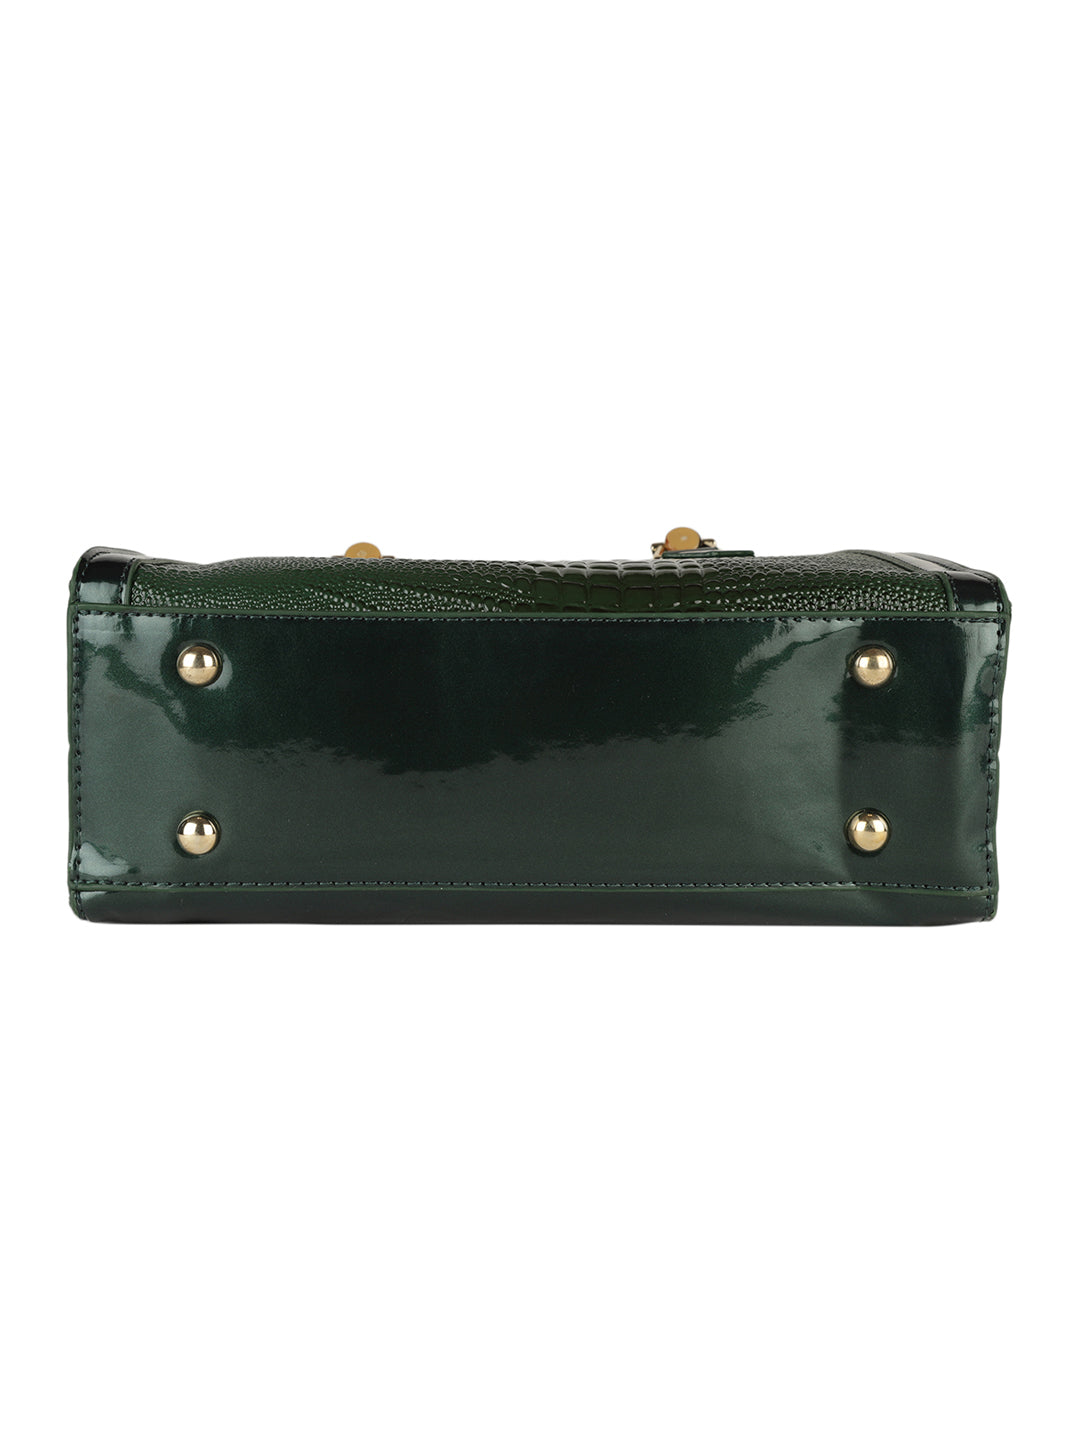 MINI WESST Women's Green Handheld Bag(MWHB118GR)